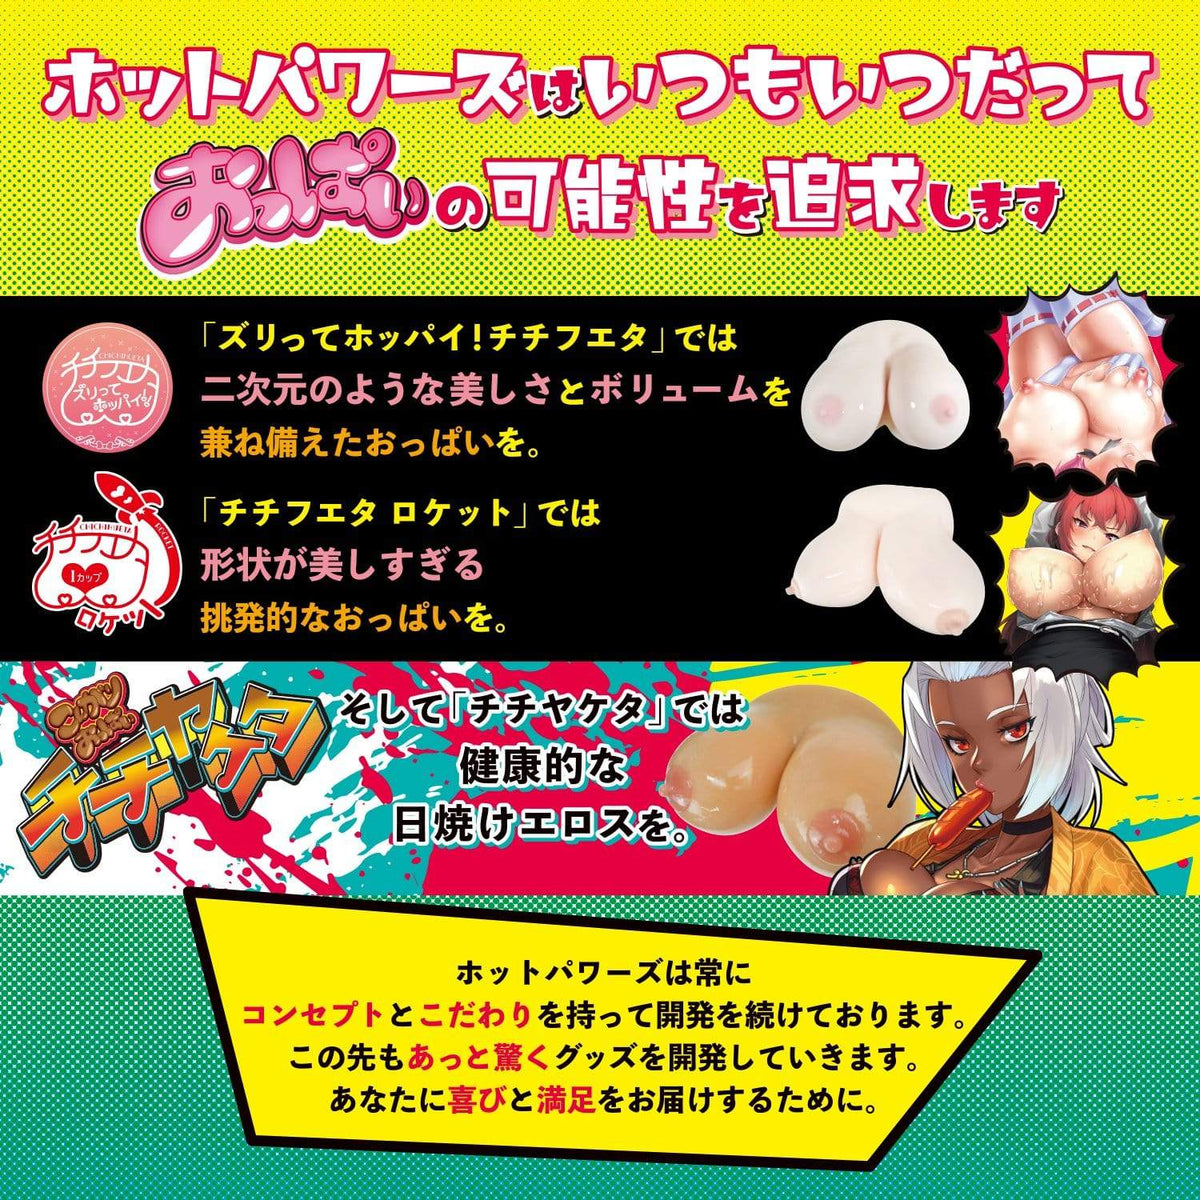 Hot Powers - Tanned Dark Big Boobs Chichiyaketa Oni Cup 4.5kg (Beige) HP1007 CherryAffairs